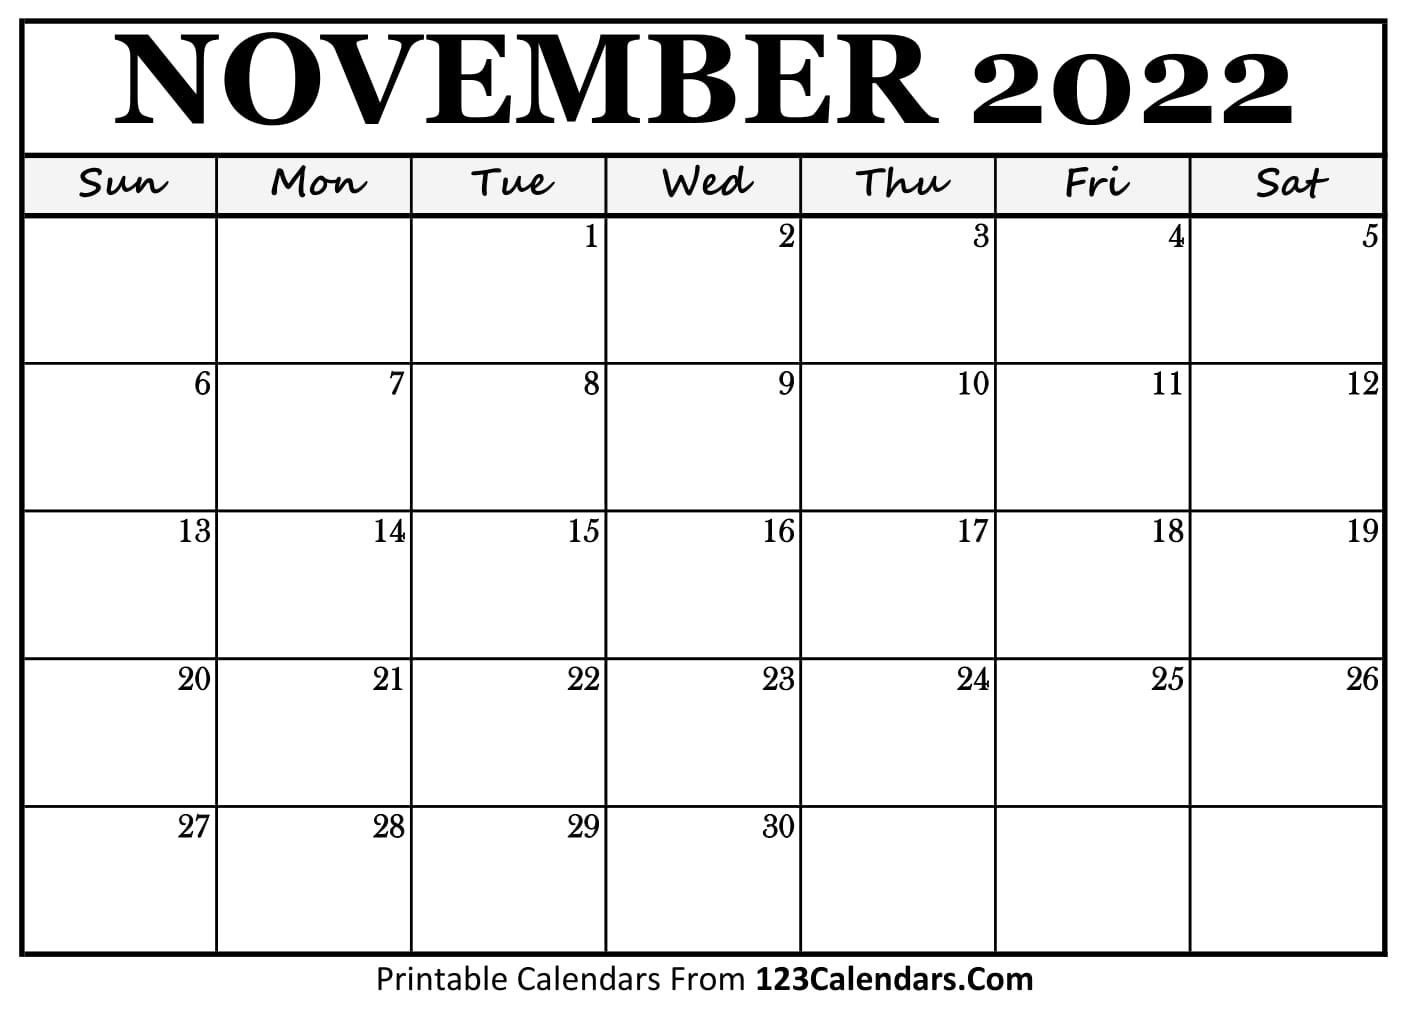 november-2022-calendars-50-free-printables-printabulls-free-printable